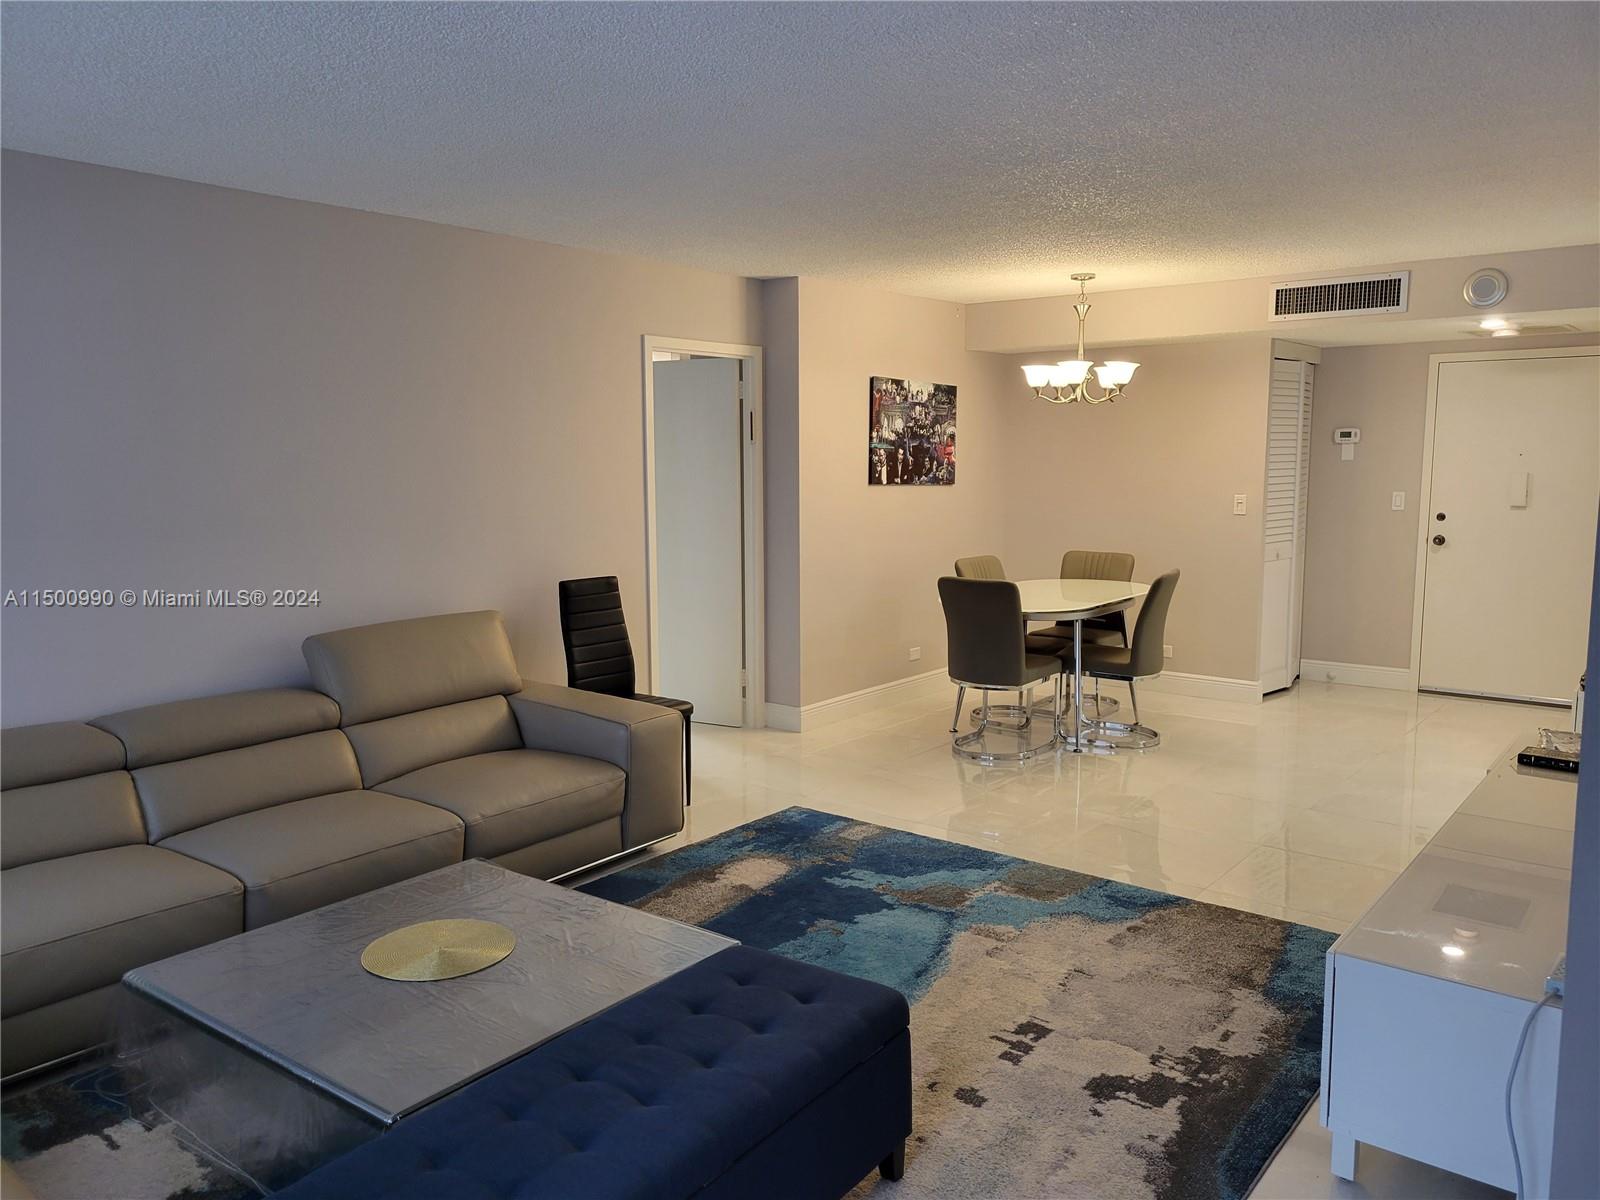 Rental Property at 251 174th St 1208, Sunny Isles Beach, Miami-Dade County, Florida - Bedrooms: 2 
Bathrooms: 2  - $2,700 MO.